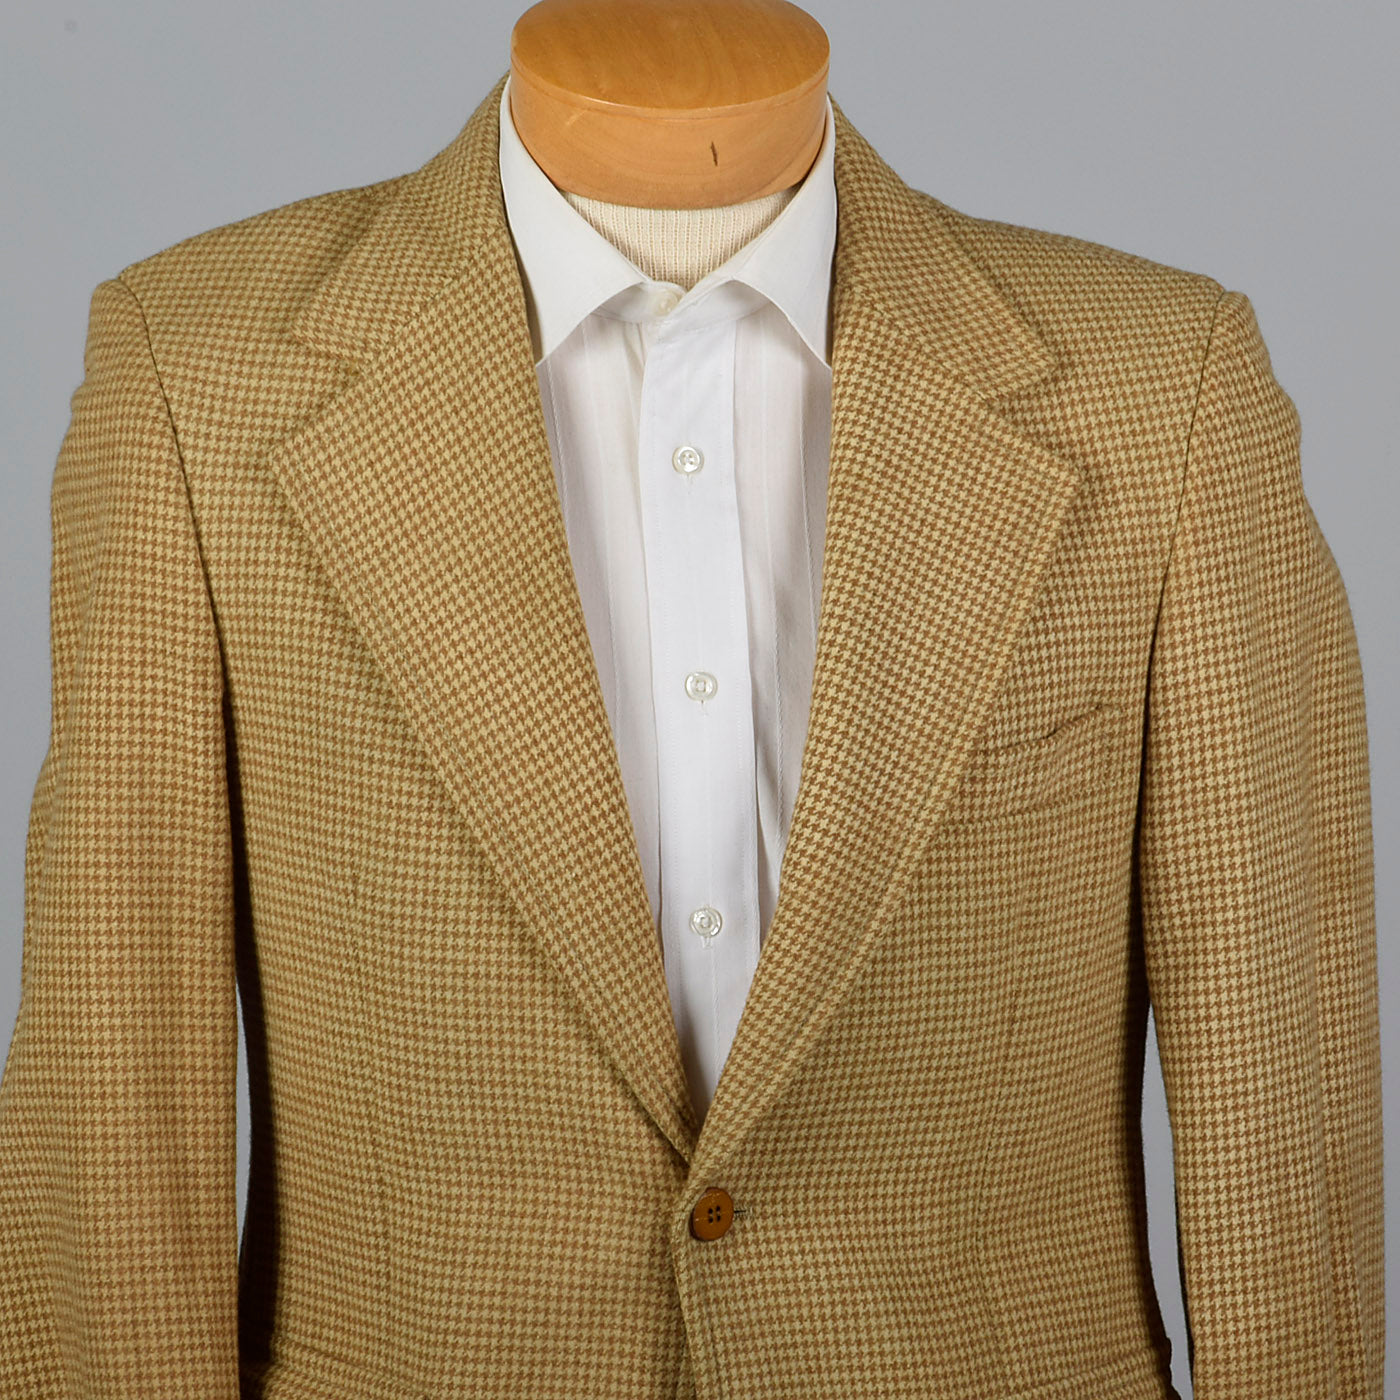 1970s Mens Houndstooth Blazer in Brown Wool